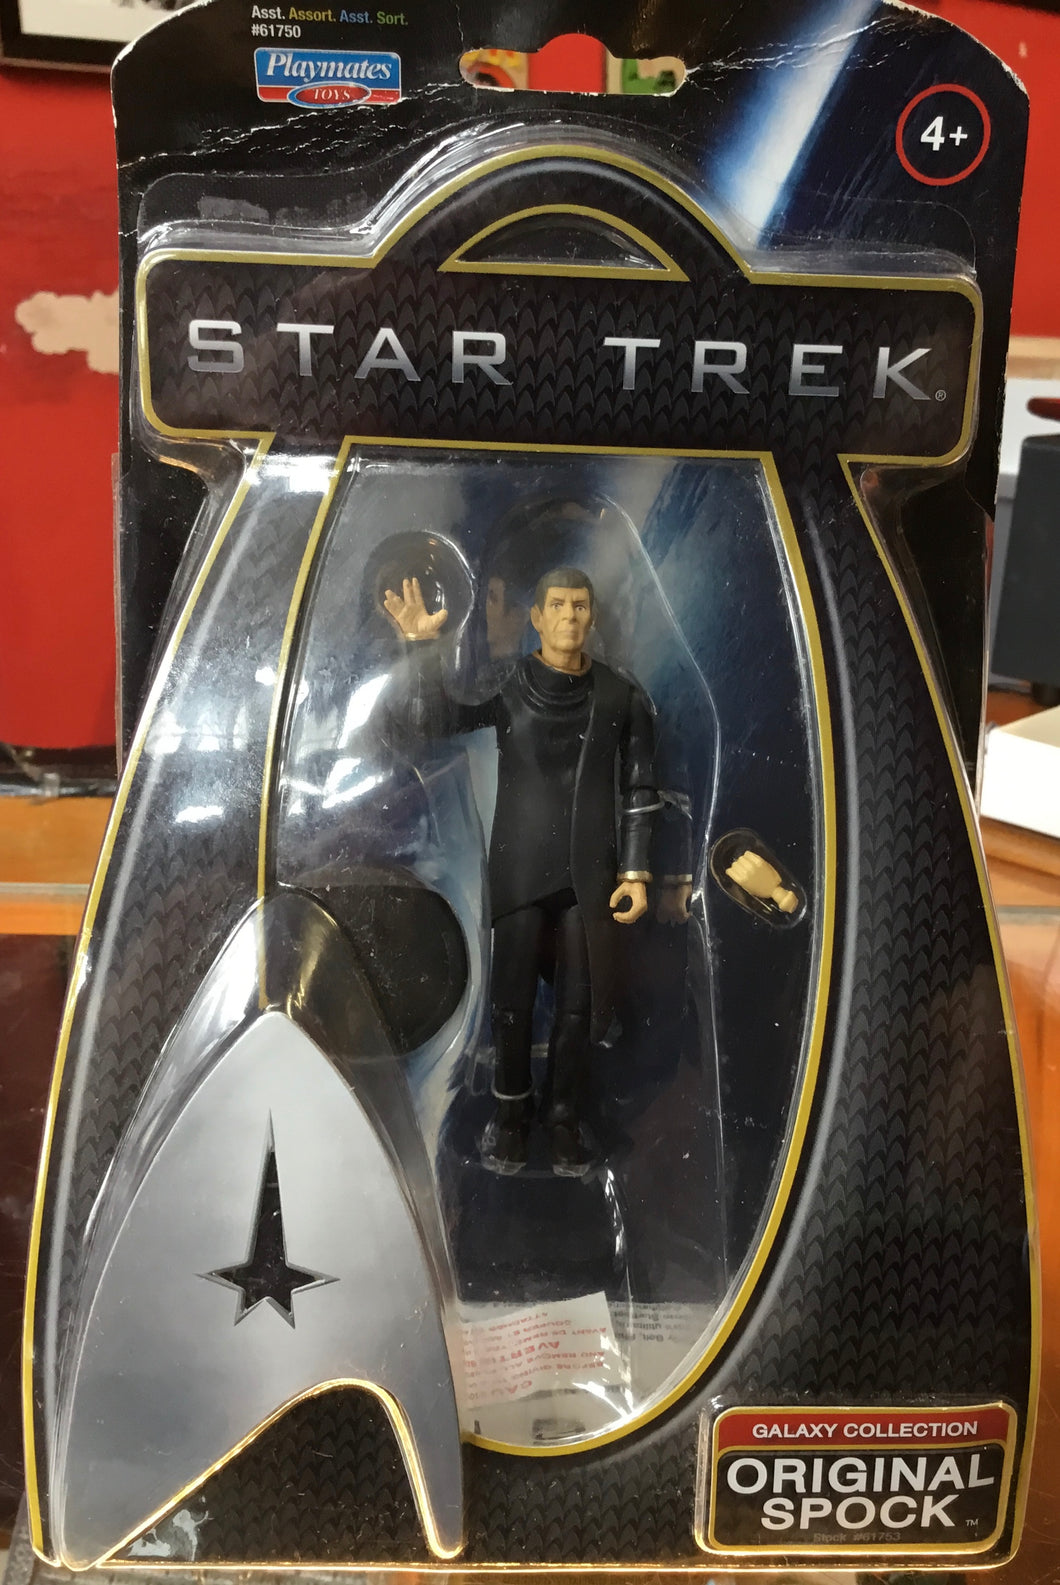 Original Spock Galaxy Collection Figure